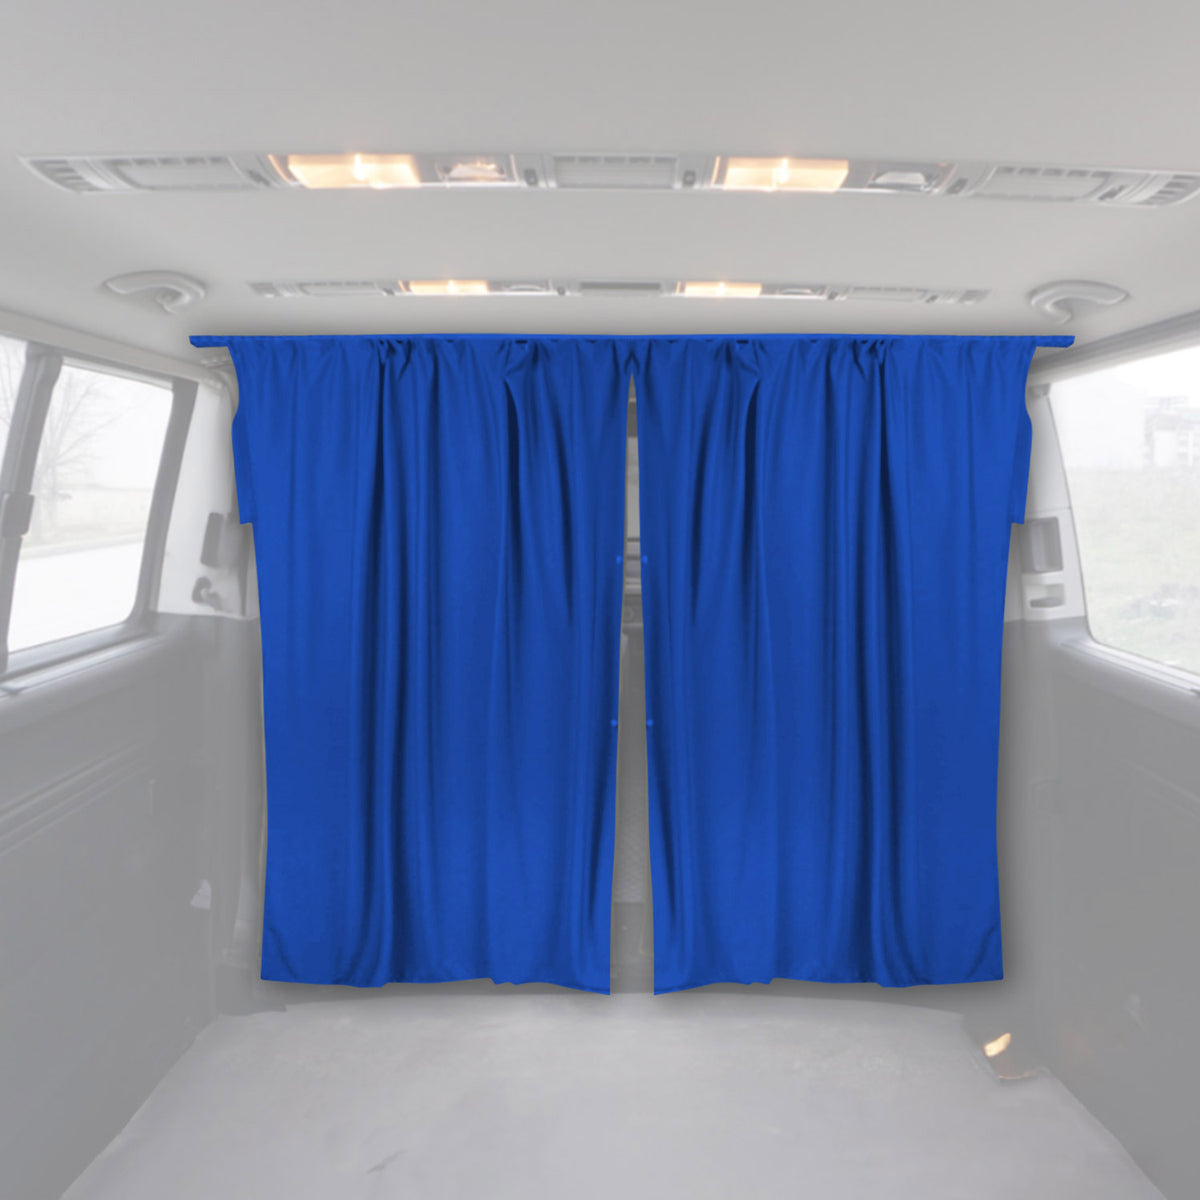 Fahrerhaus Führerhaus Gardinen Sonnenschutz für Dacia Jogger Blau 2tlg